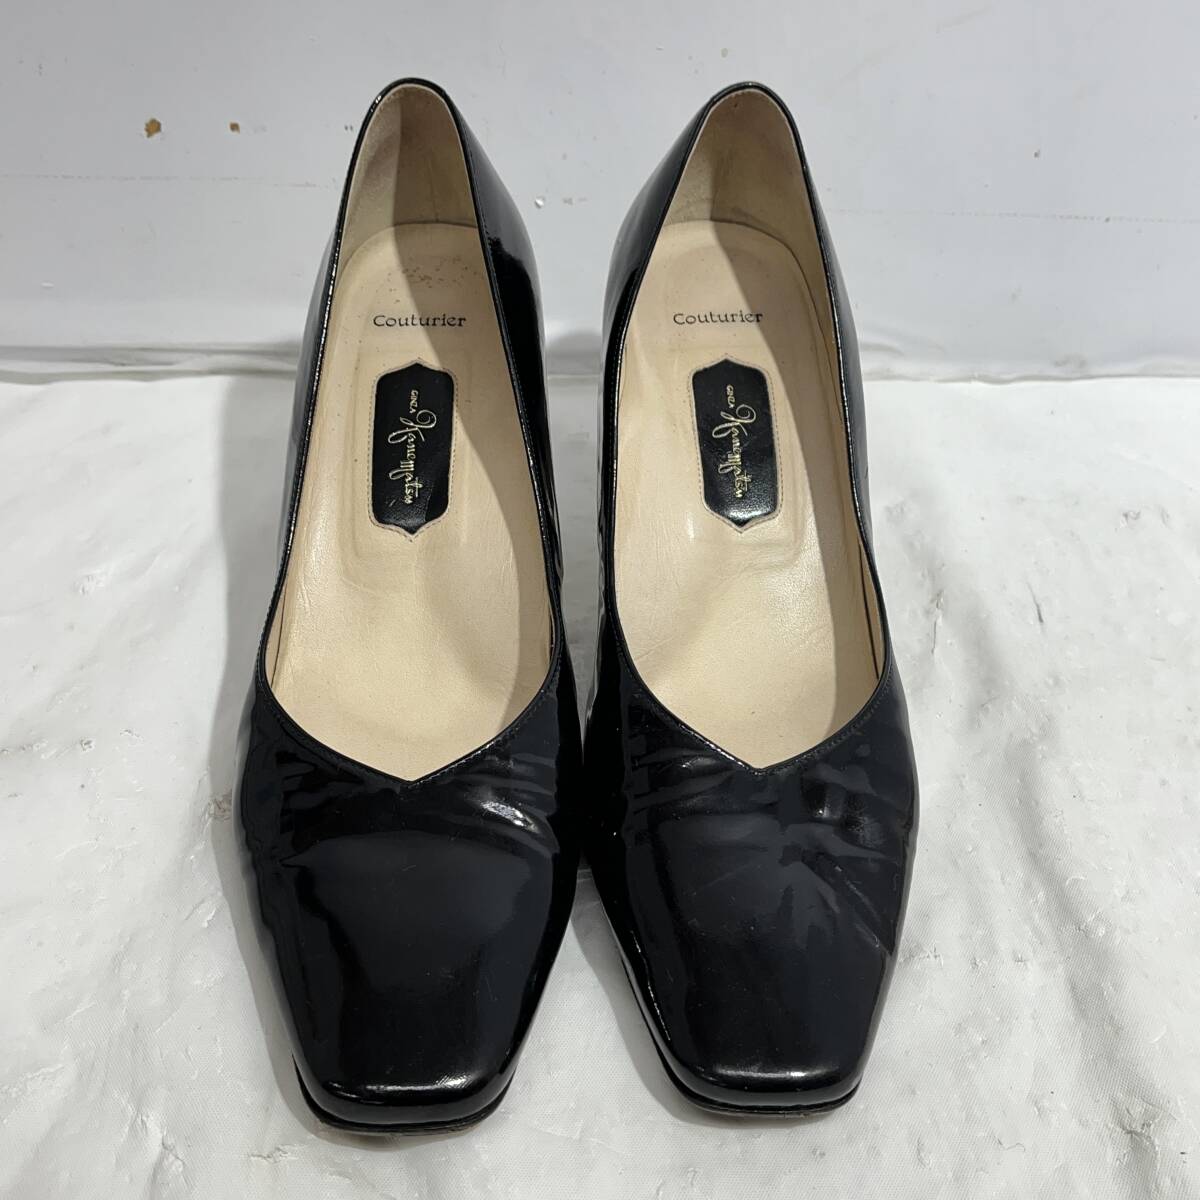 (. tree )GINZA Kanematsu/ Ginza Kanematsu Couturier/kchulie heel pumps leather shoes leather R M 24cm 1/2 C black black business (o)